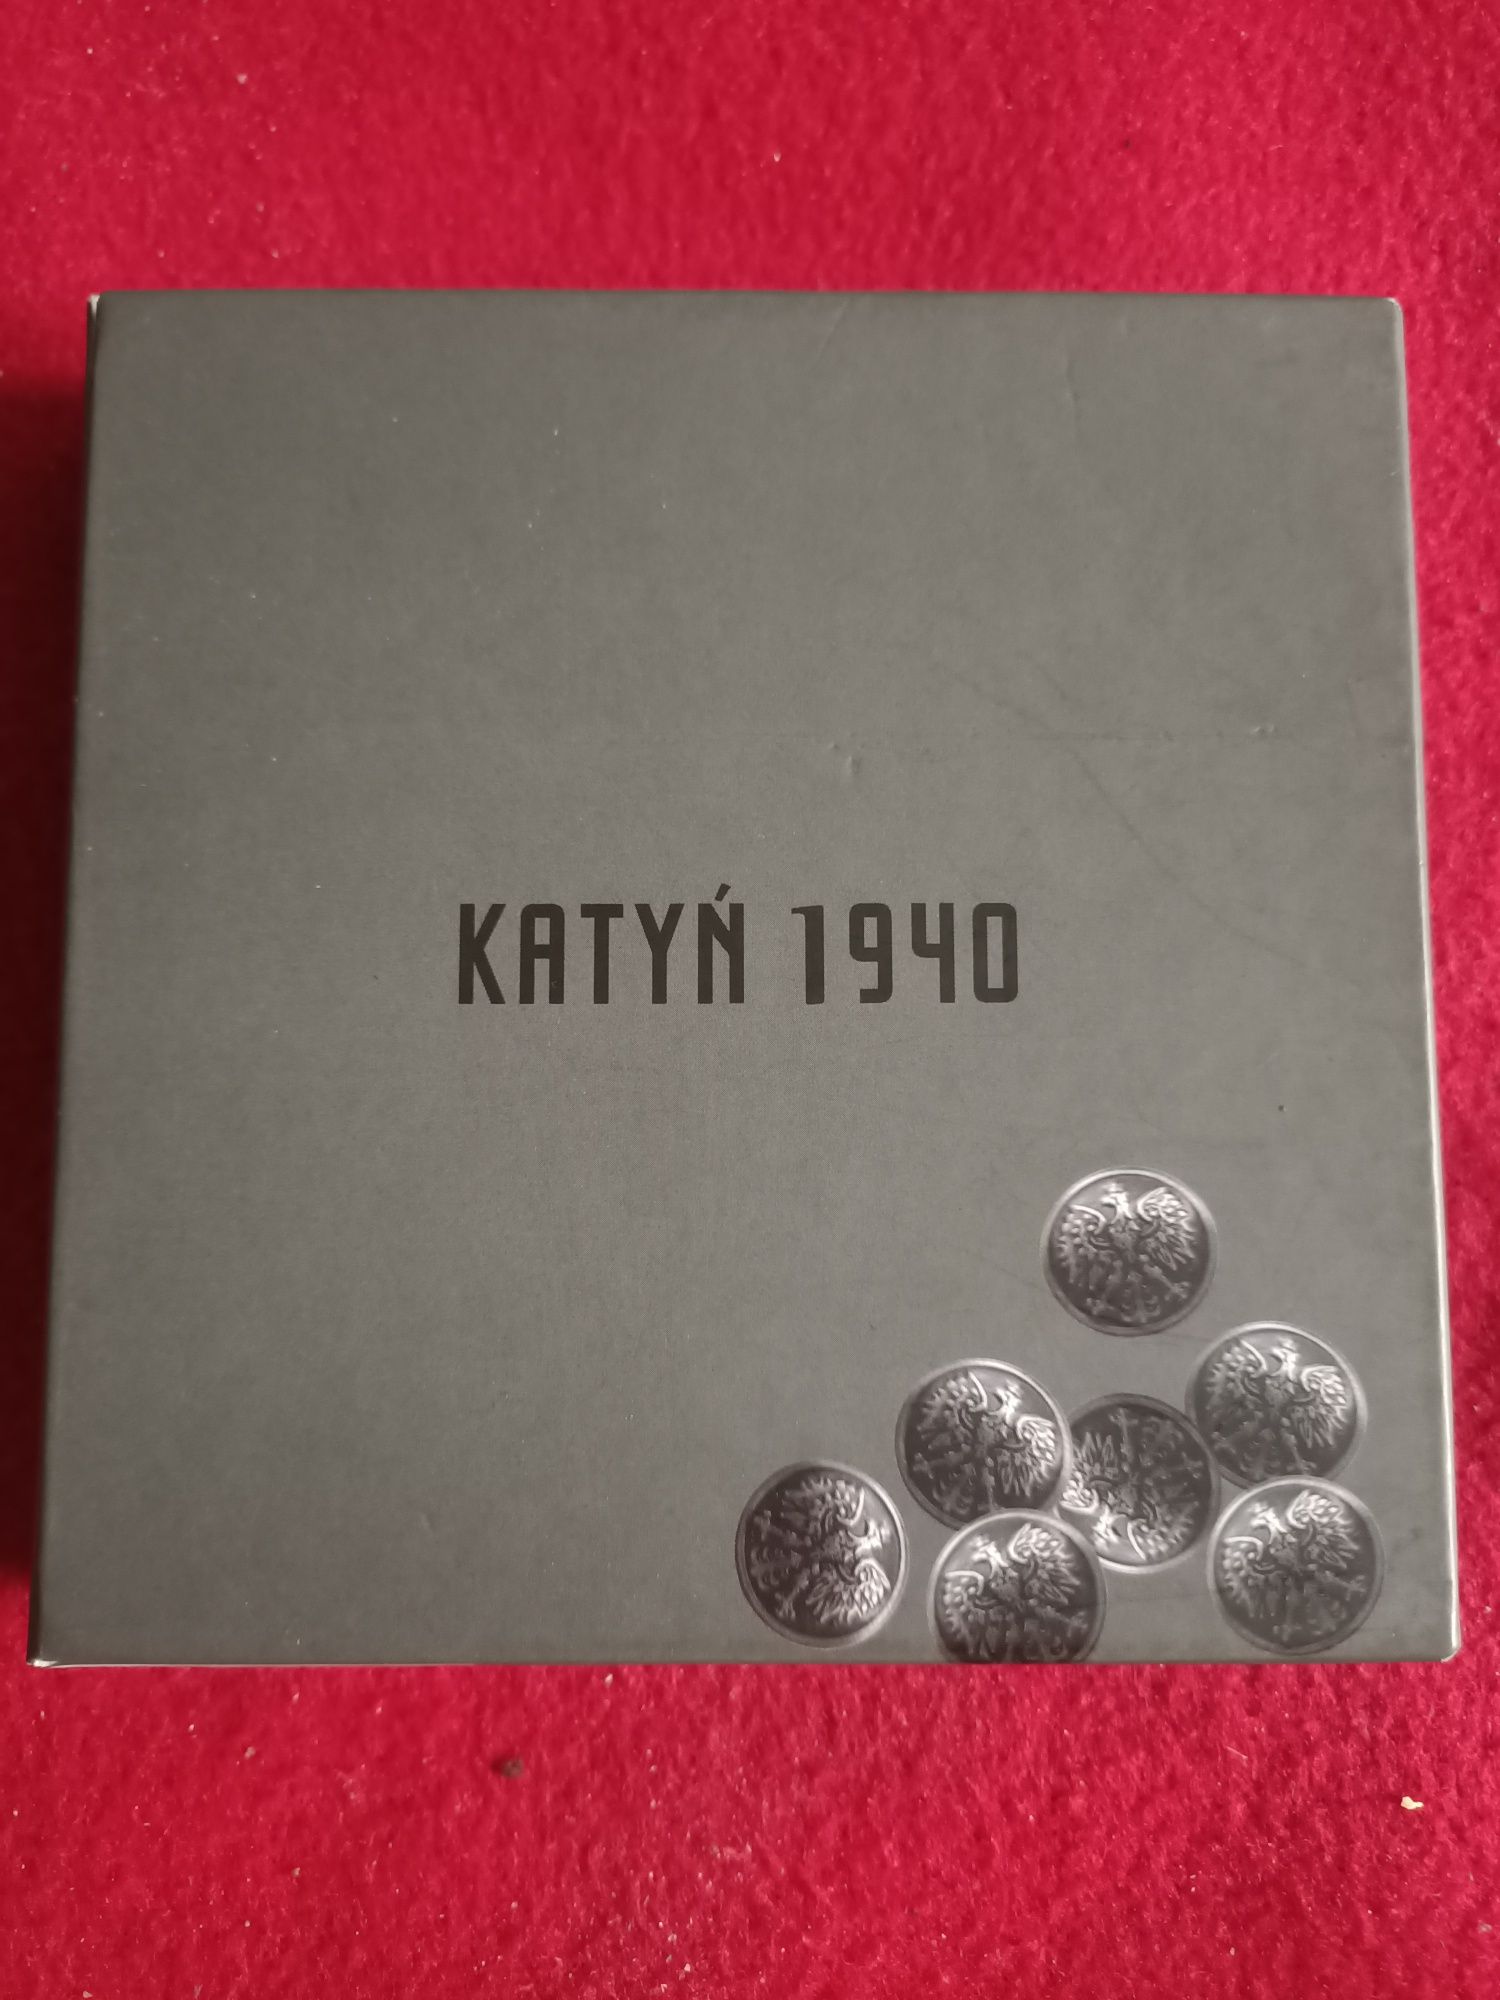 Katyń 1940 4 CD box